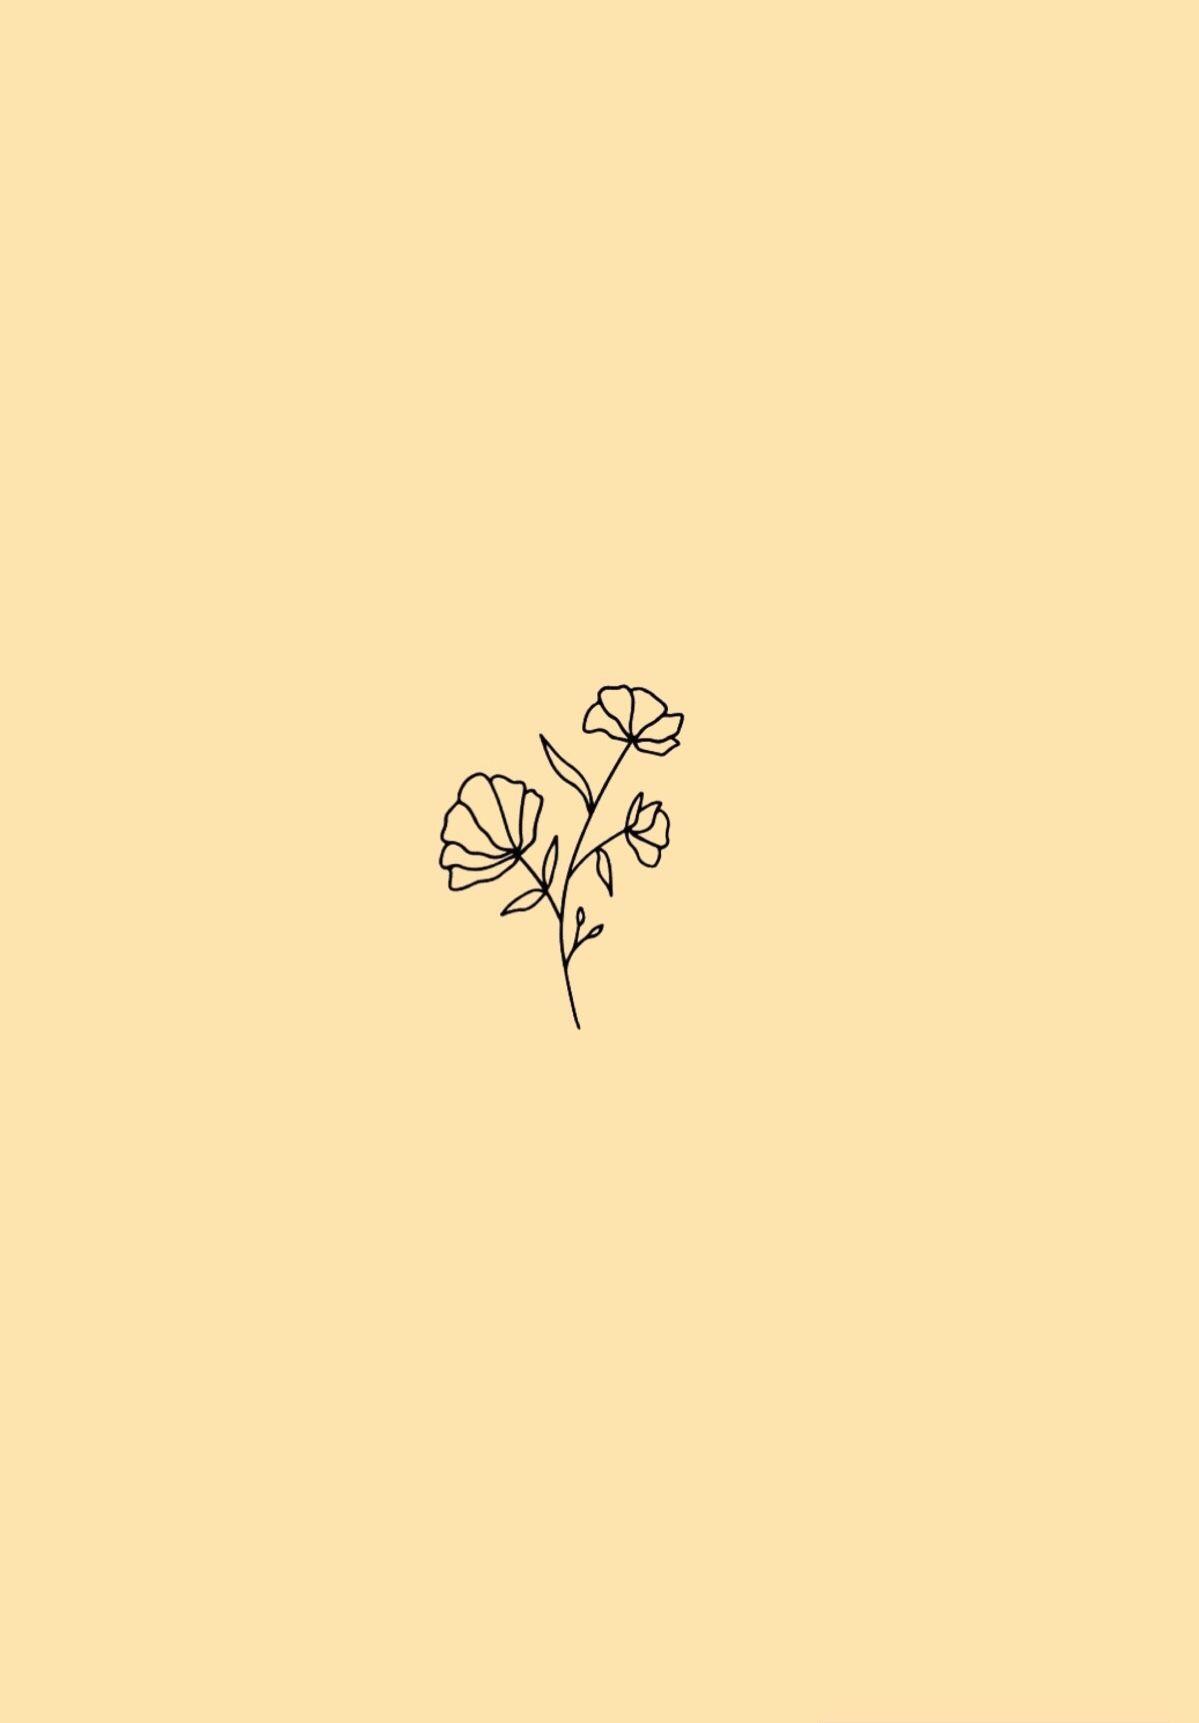 A simple flower logo design - Minimalist, pastel minimalist, pastel yellow